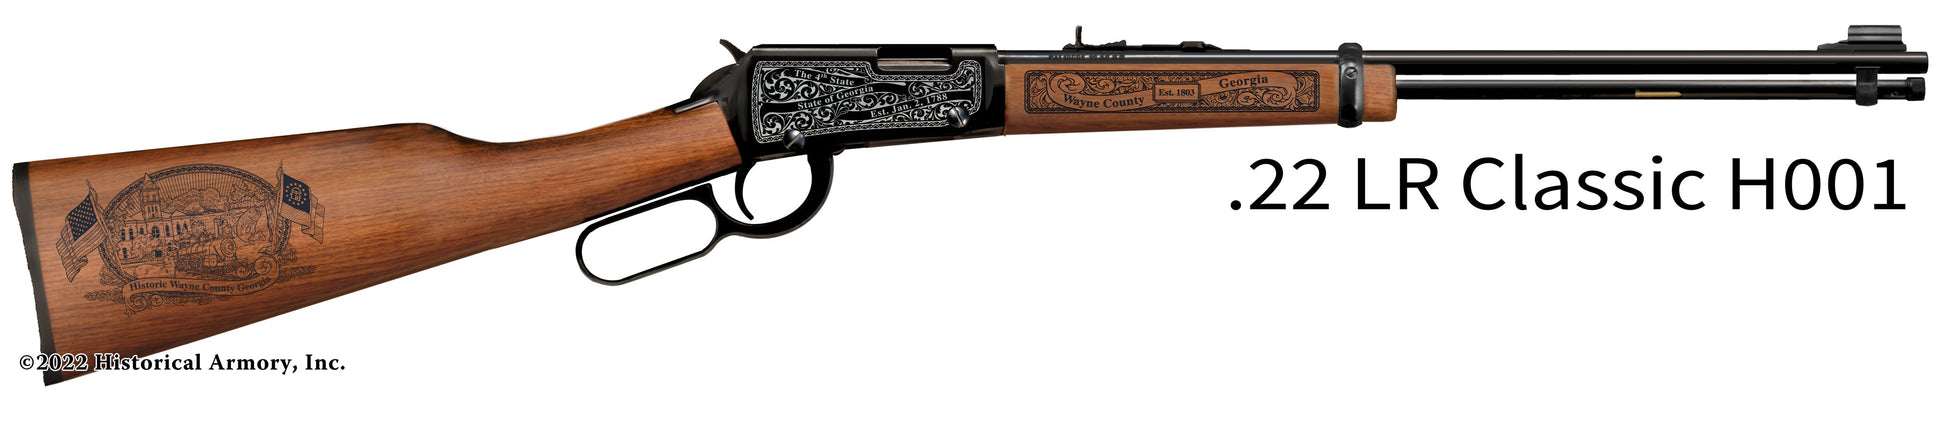 Wayne County Georgia Engraved Henry H001 Rifle